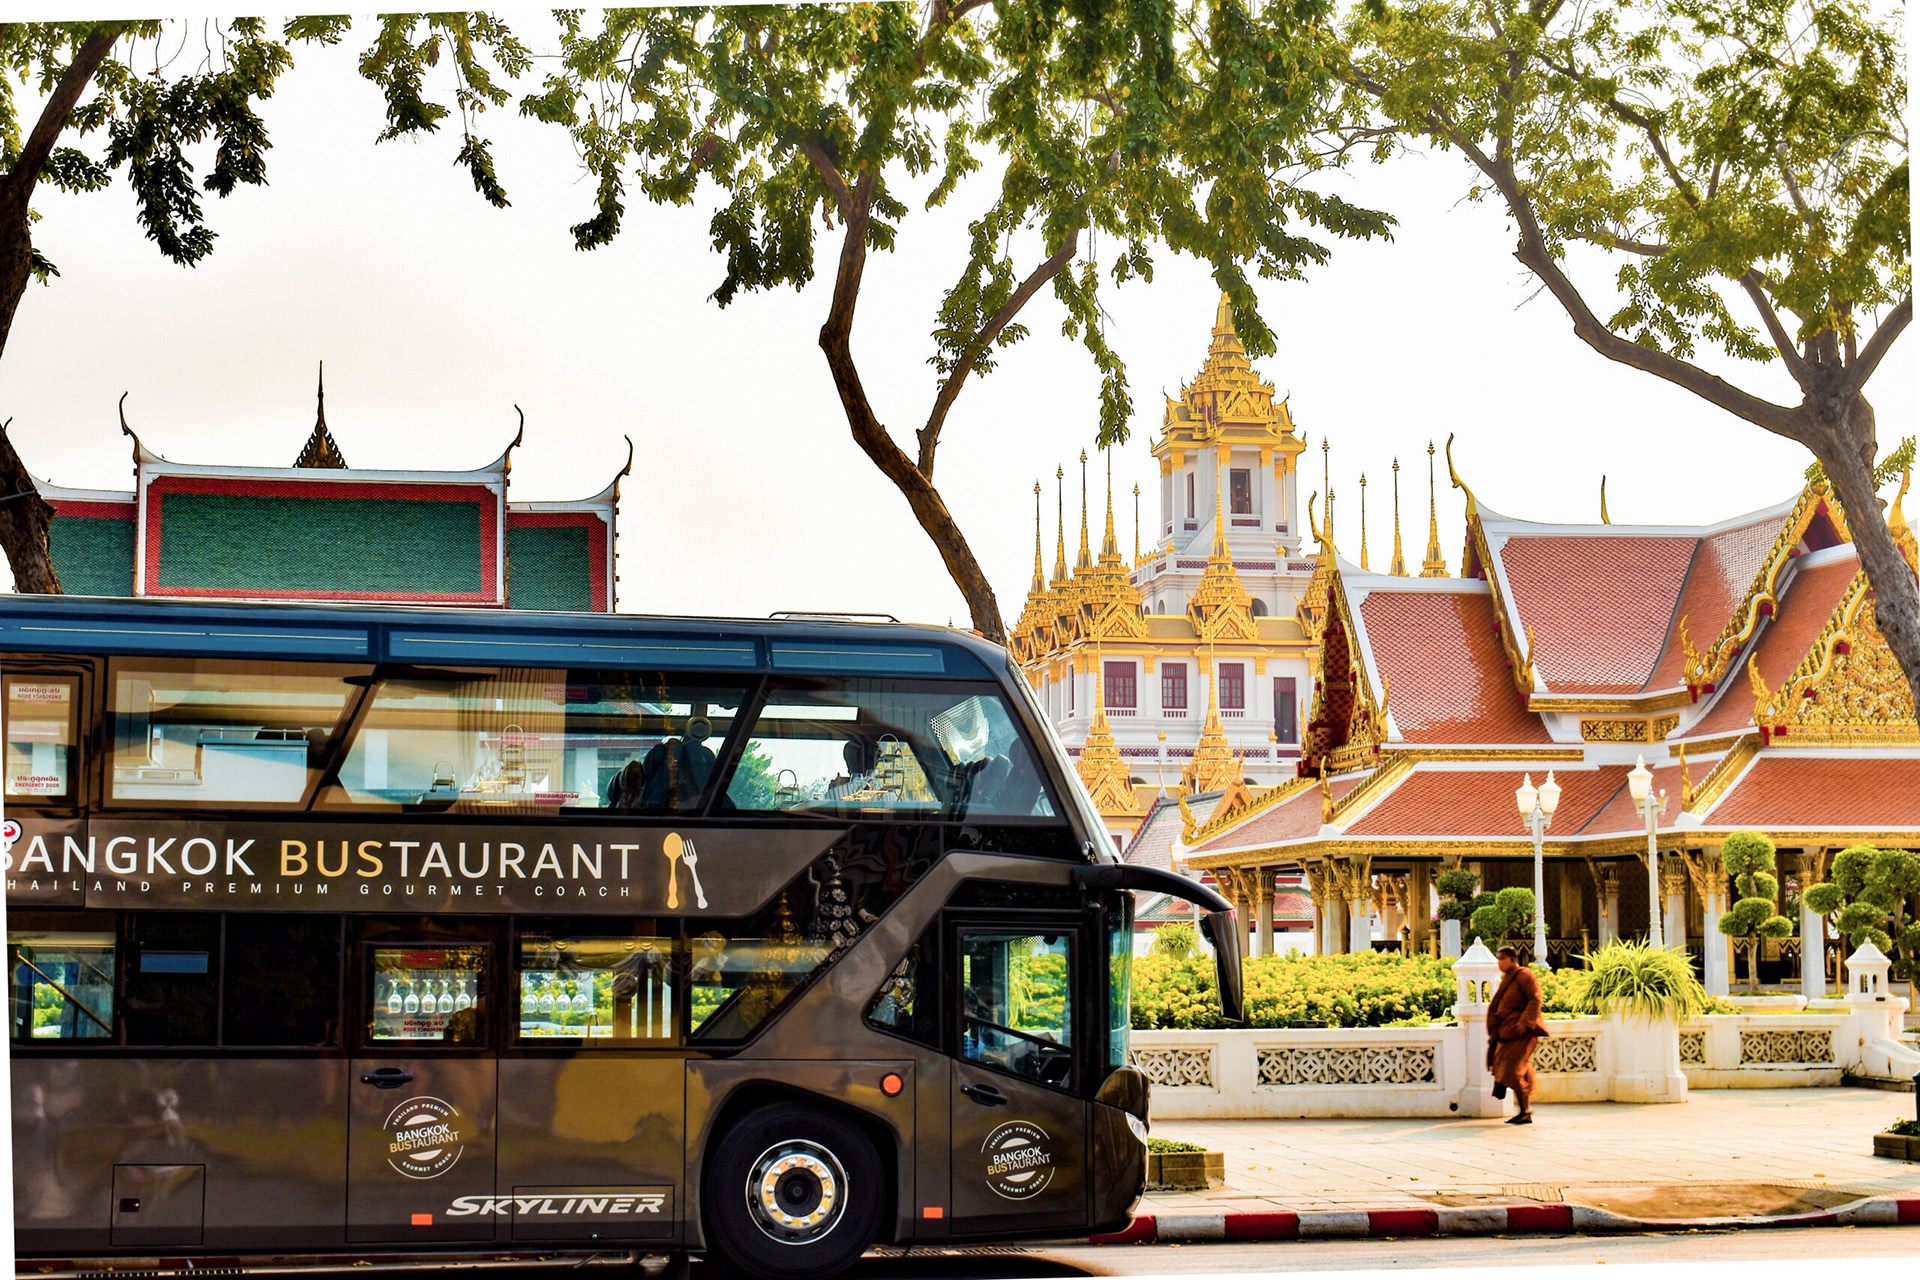 Bangkok bustaurant exterior (2).jpg